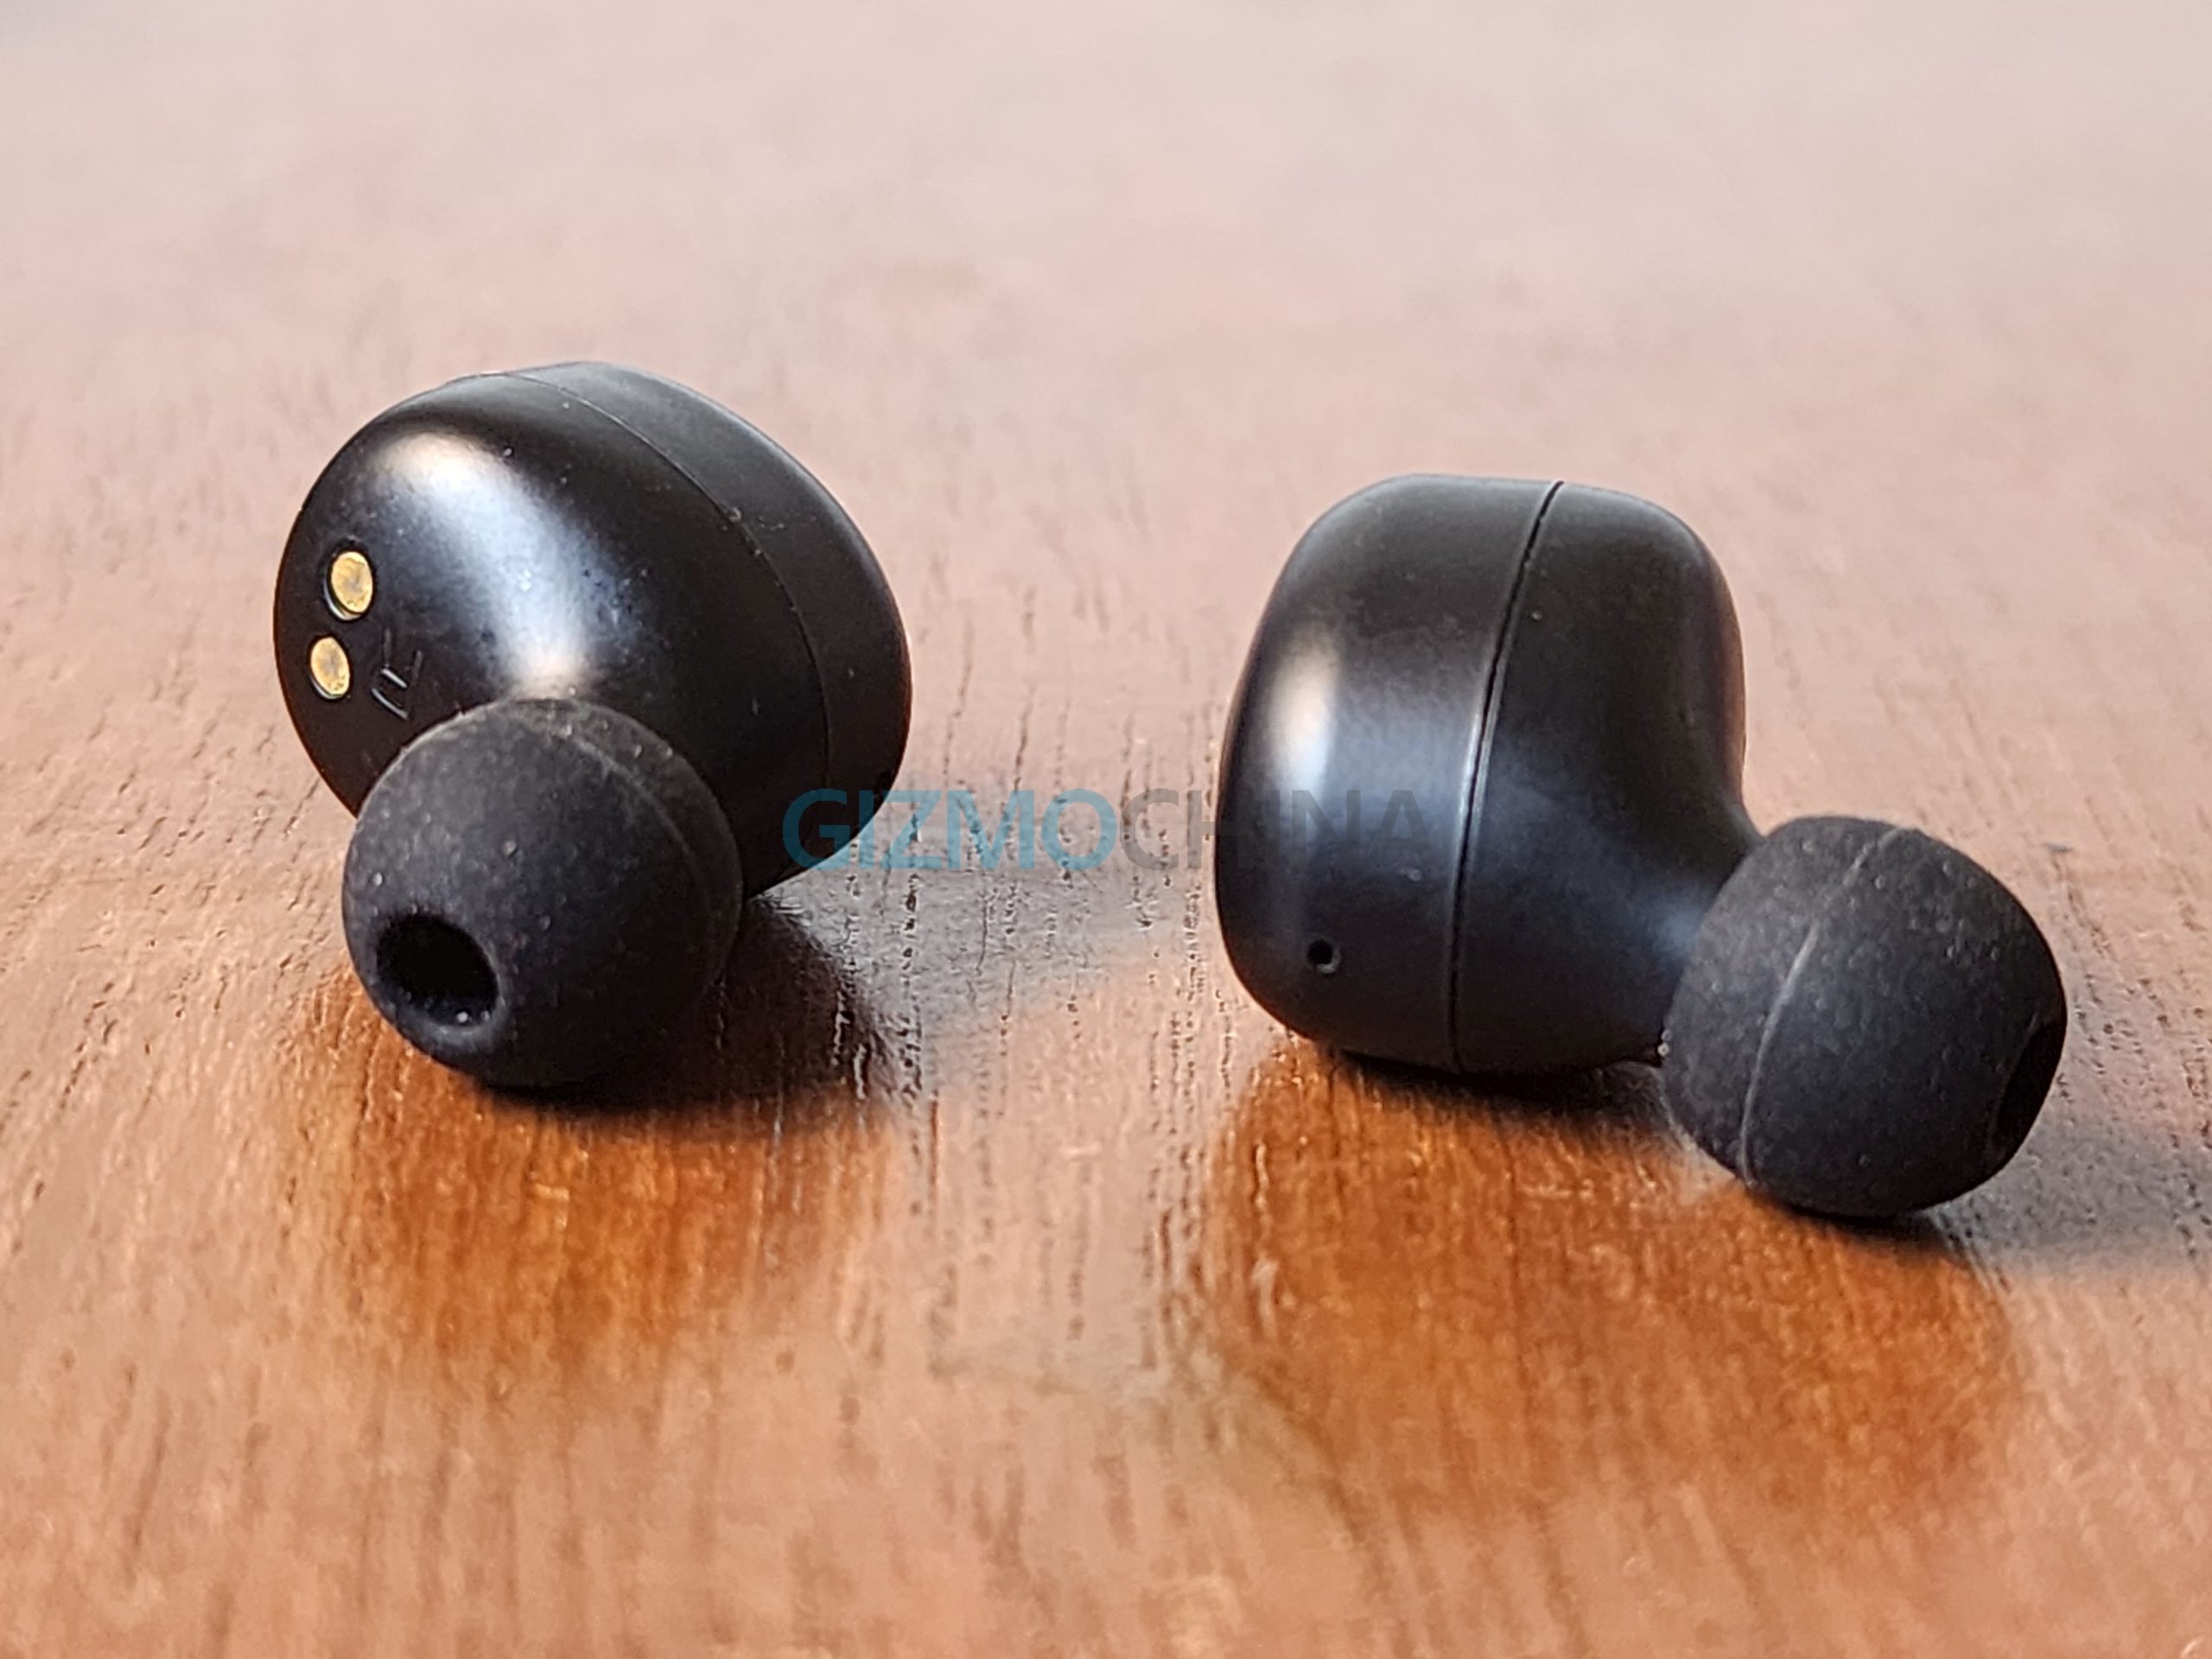 Yamaha TW-E3B TWS earbuds